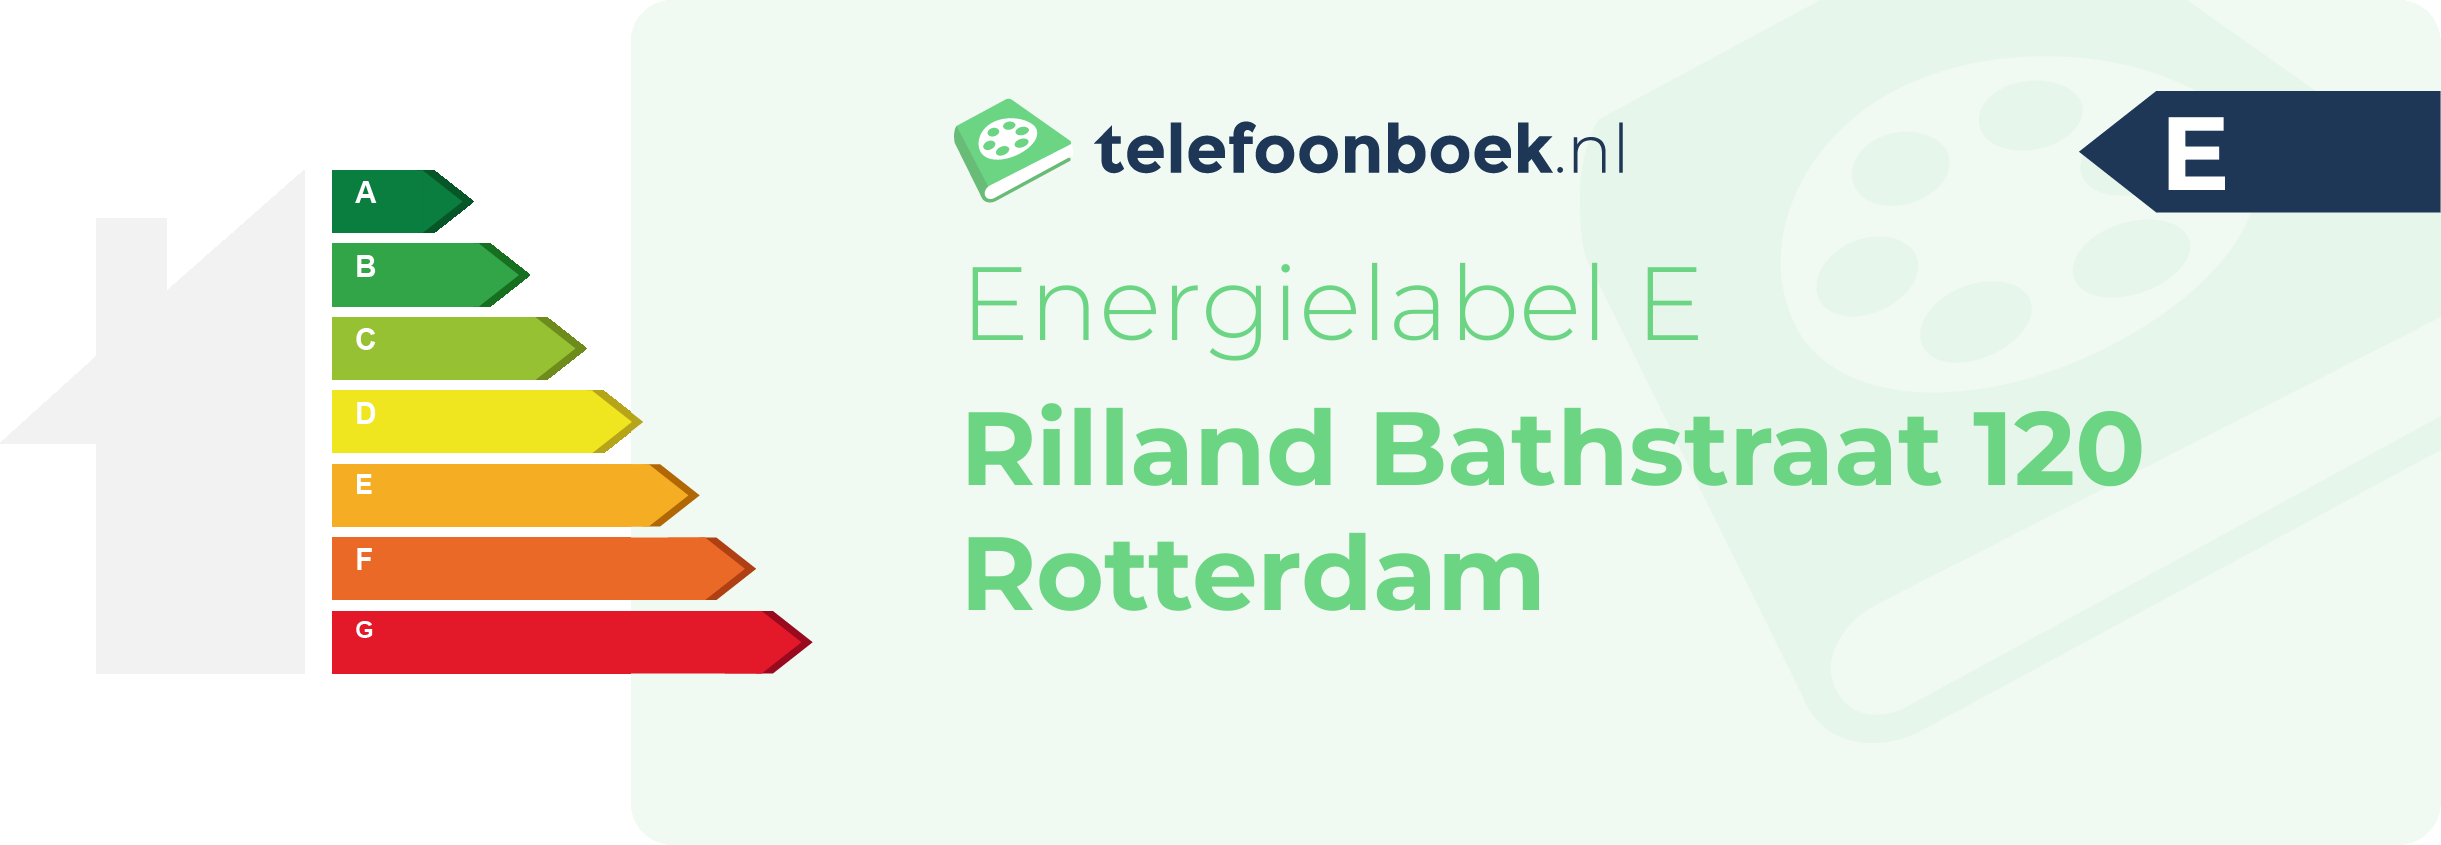 Energielabel Rilland Bathstraat 120 Rotterdam